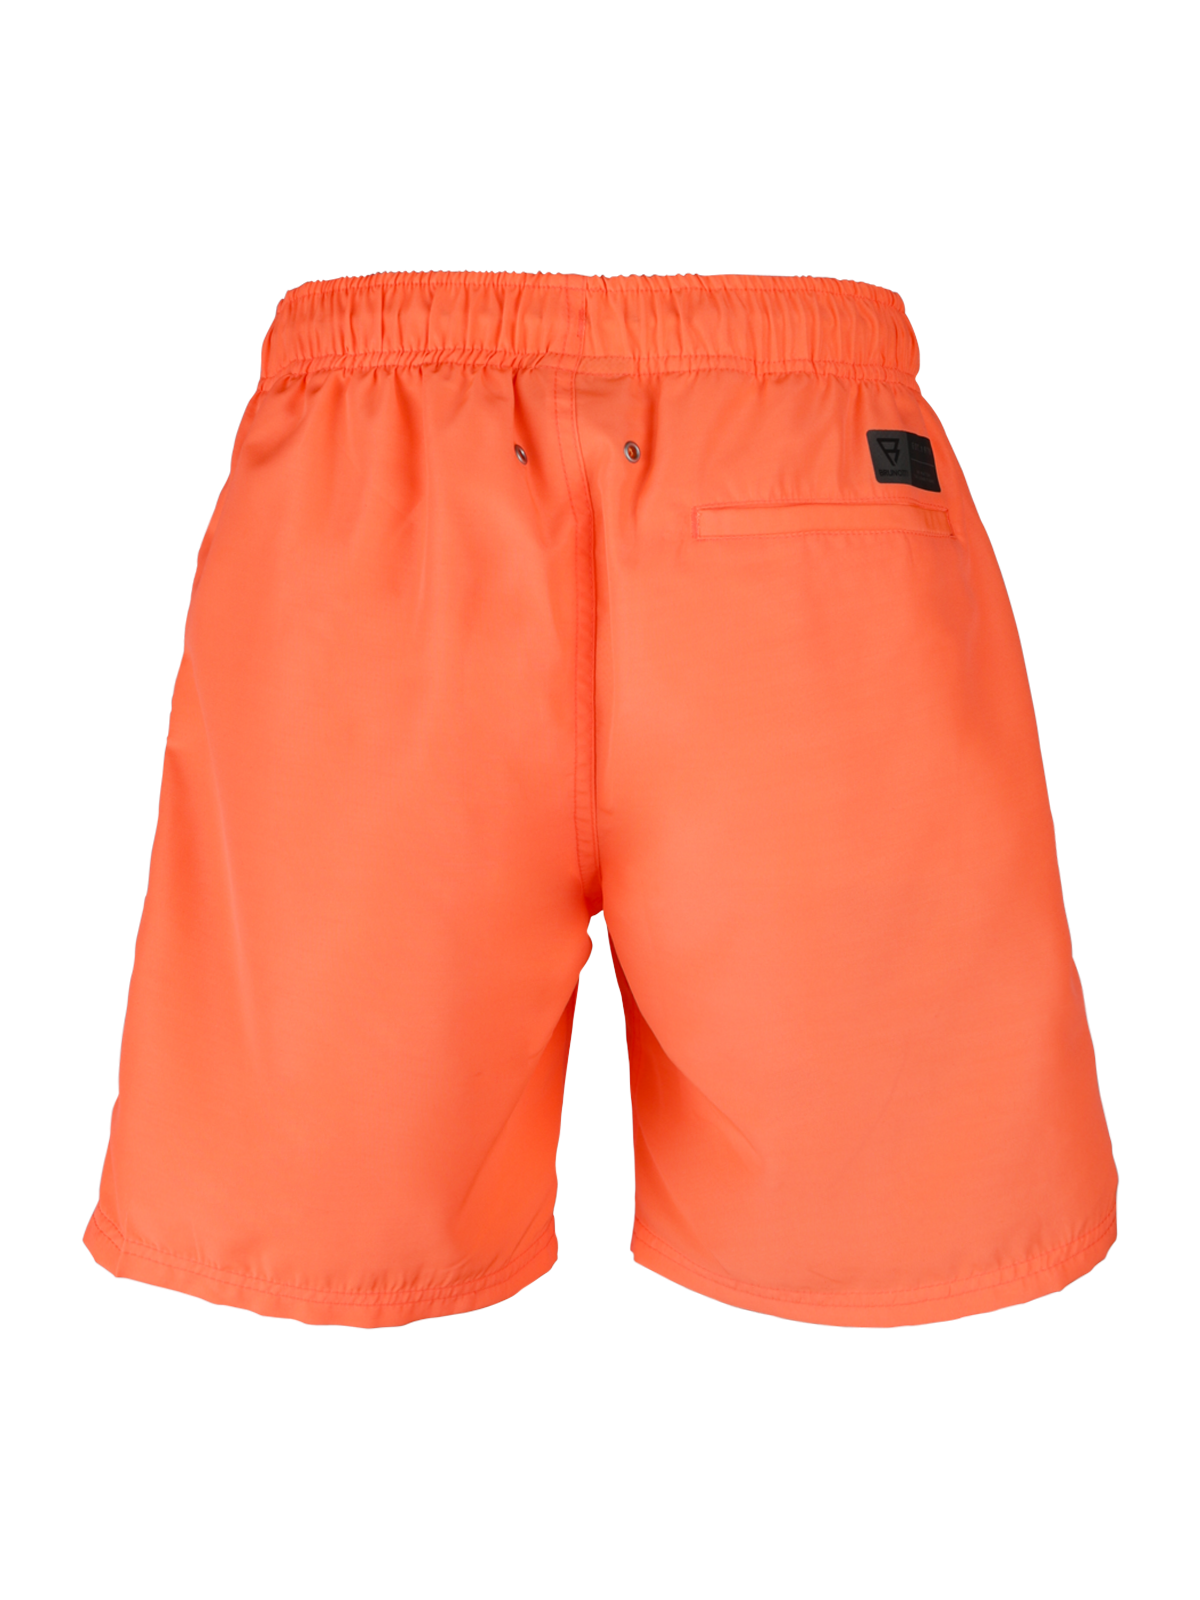 Hestey Boys Swim Shorts | Flamingo Pink